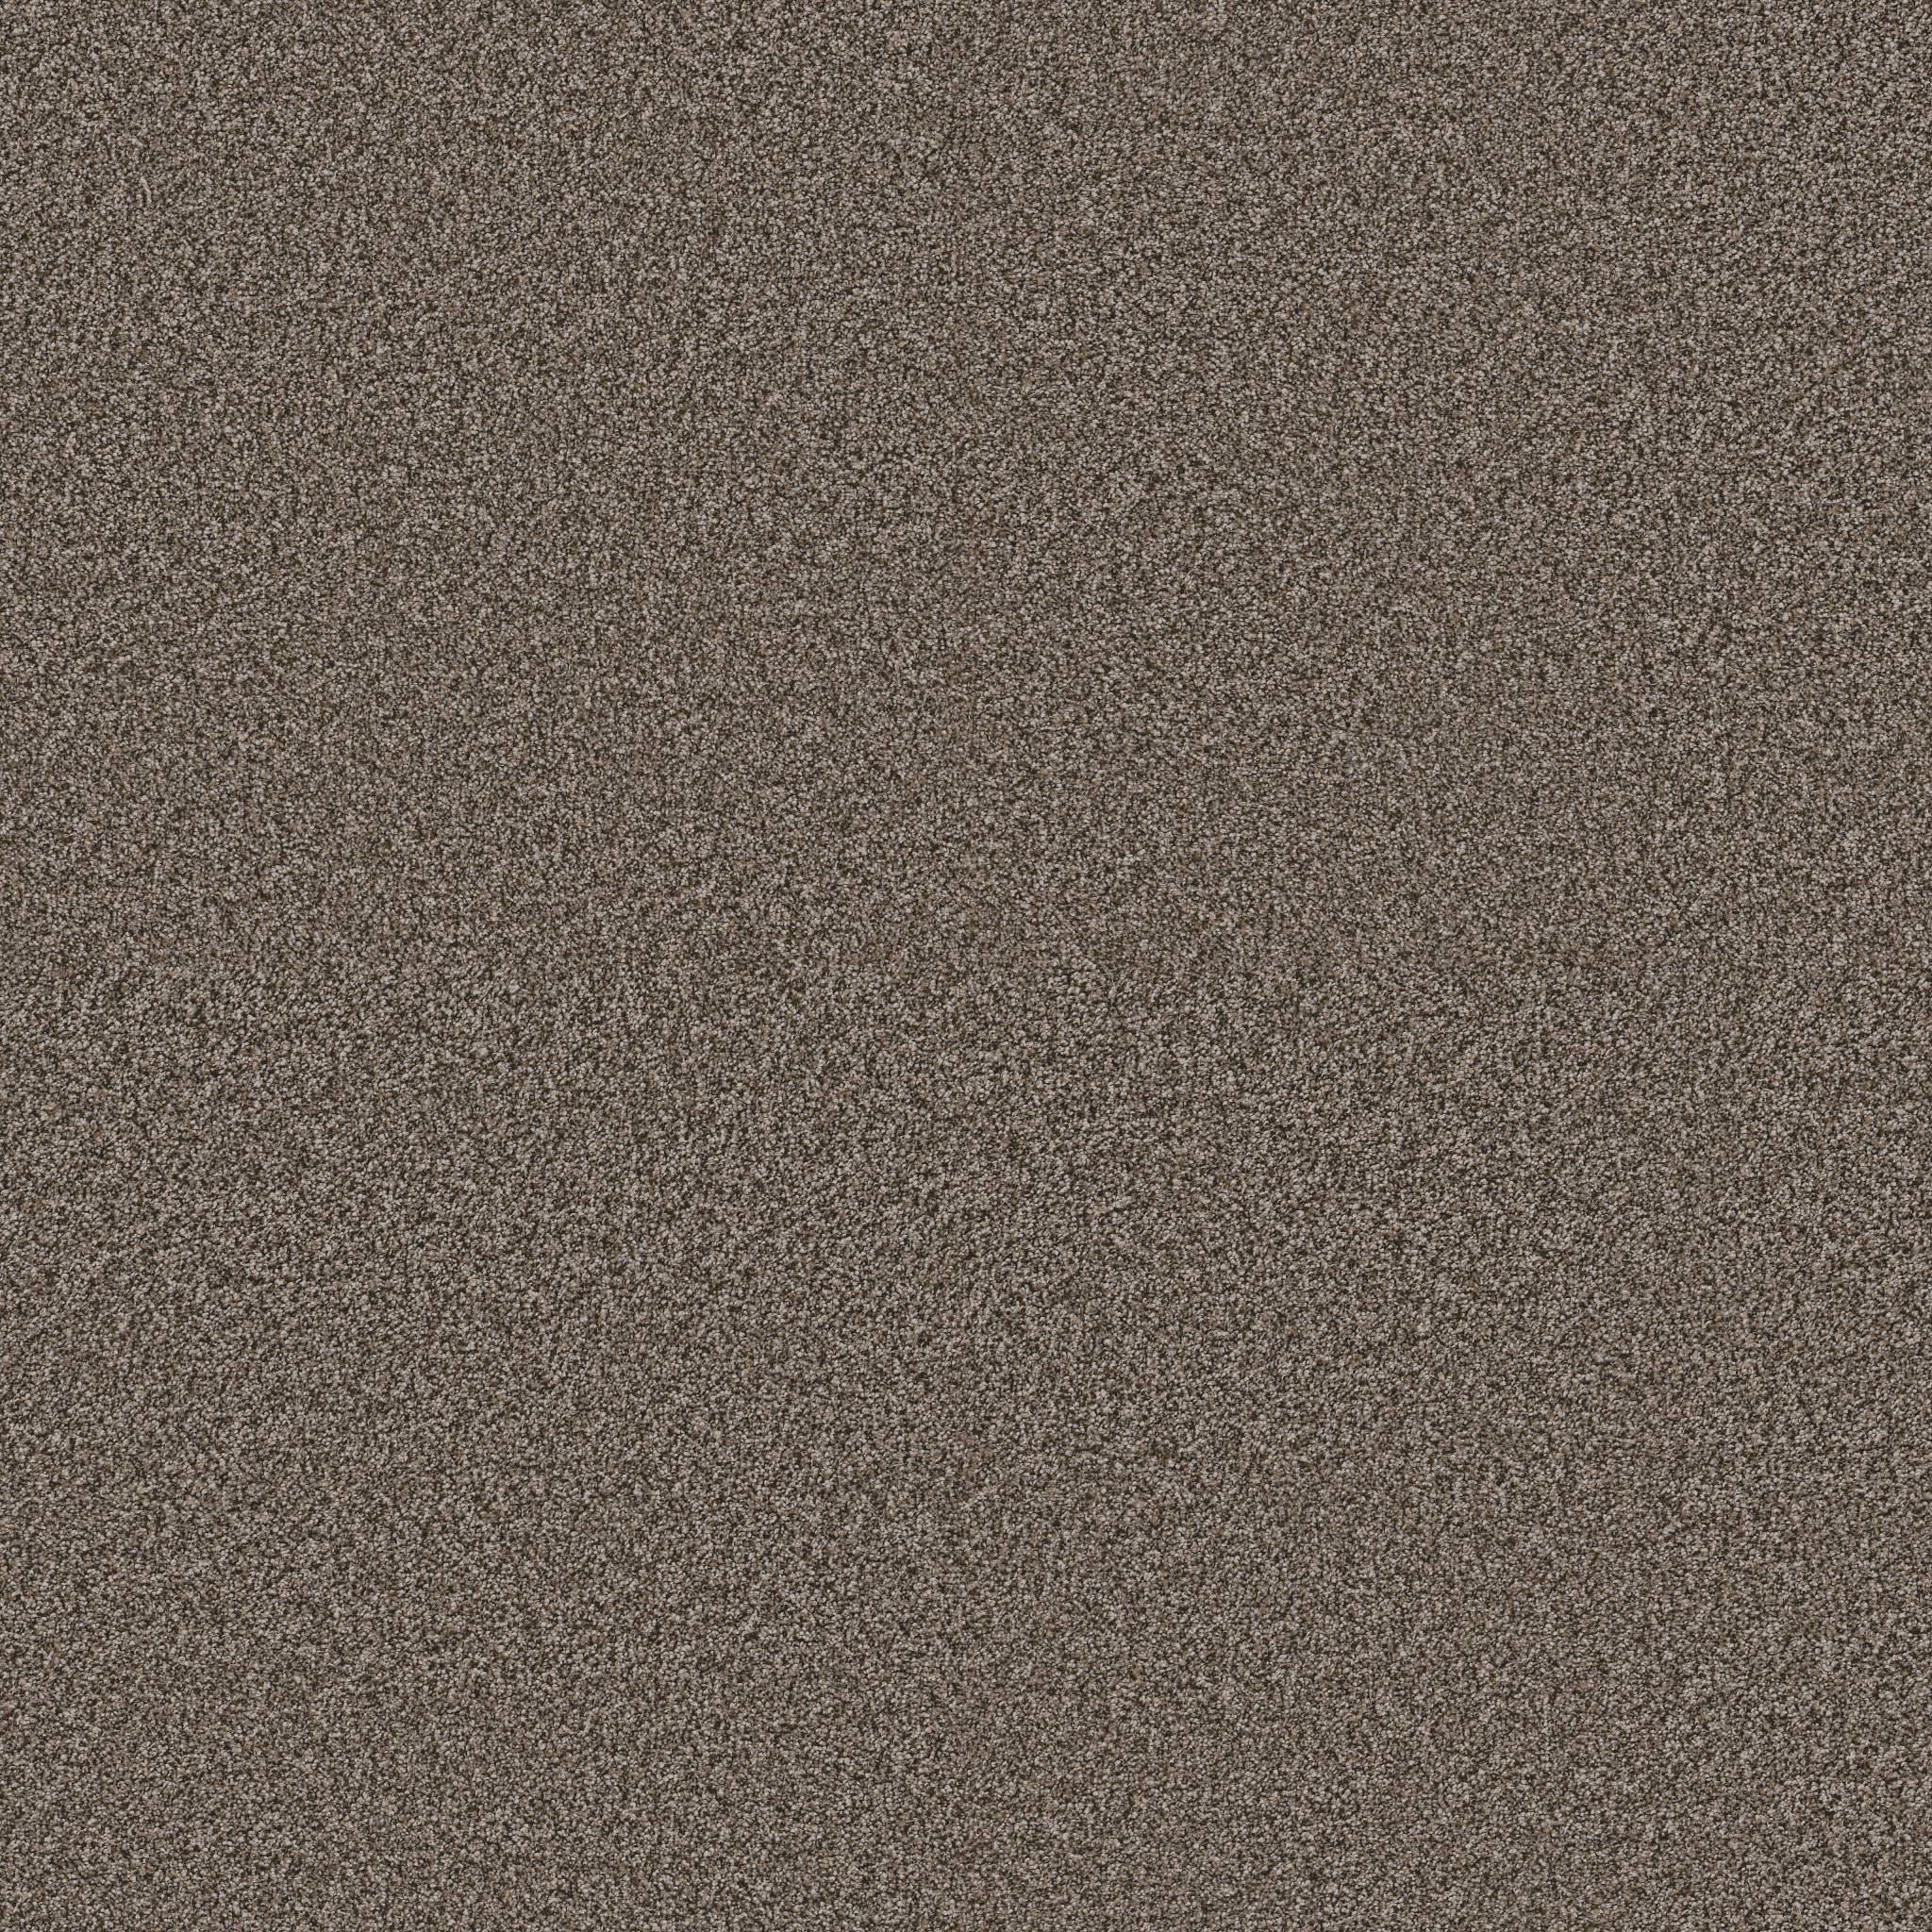 Kaleidoscope Carpet - Open Range Zoomed Swatch Image